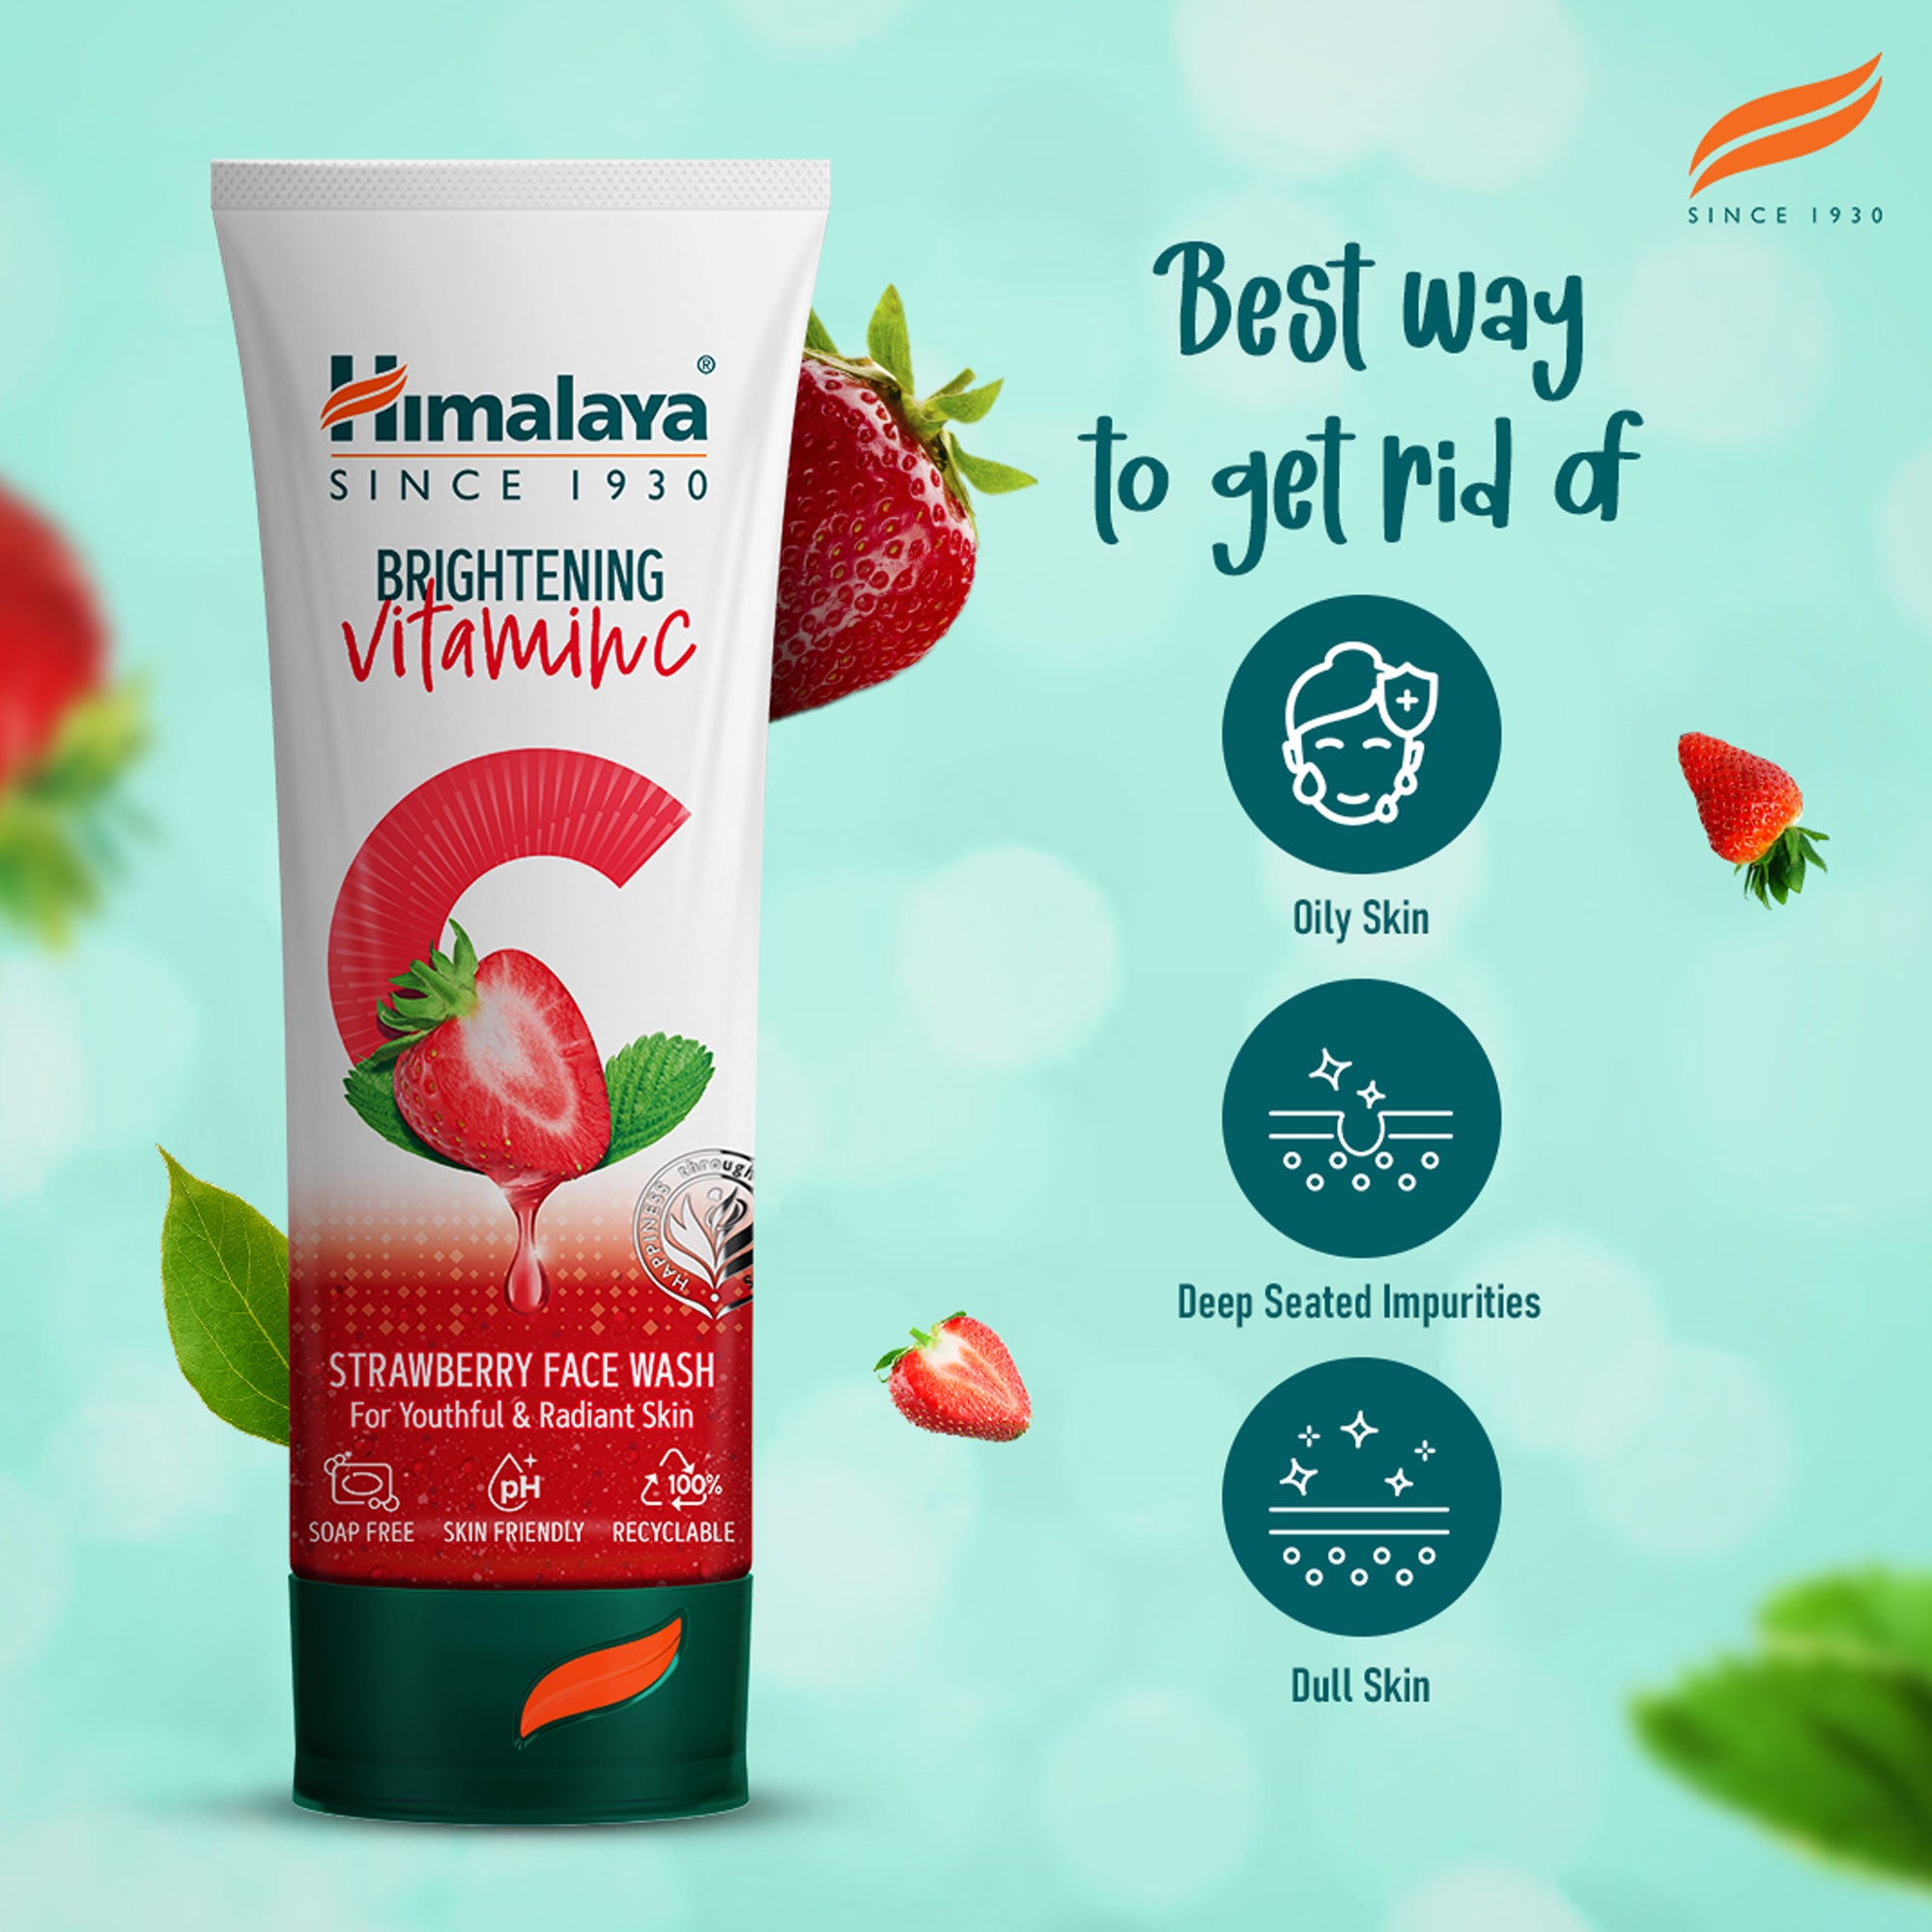 Himalaya Brightening Vitamin C Strawberry Face Wash